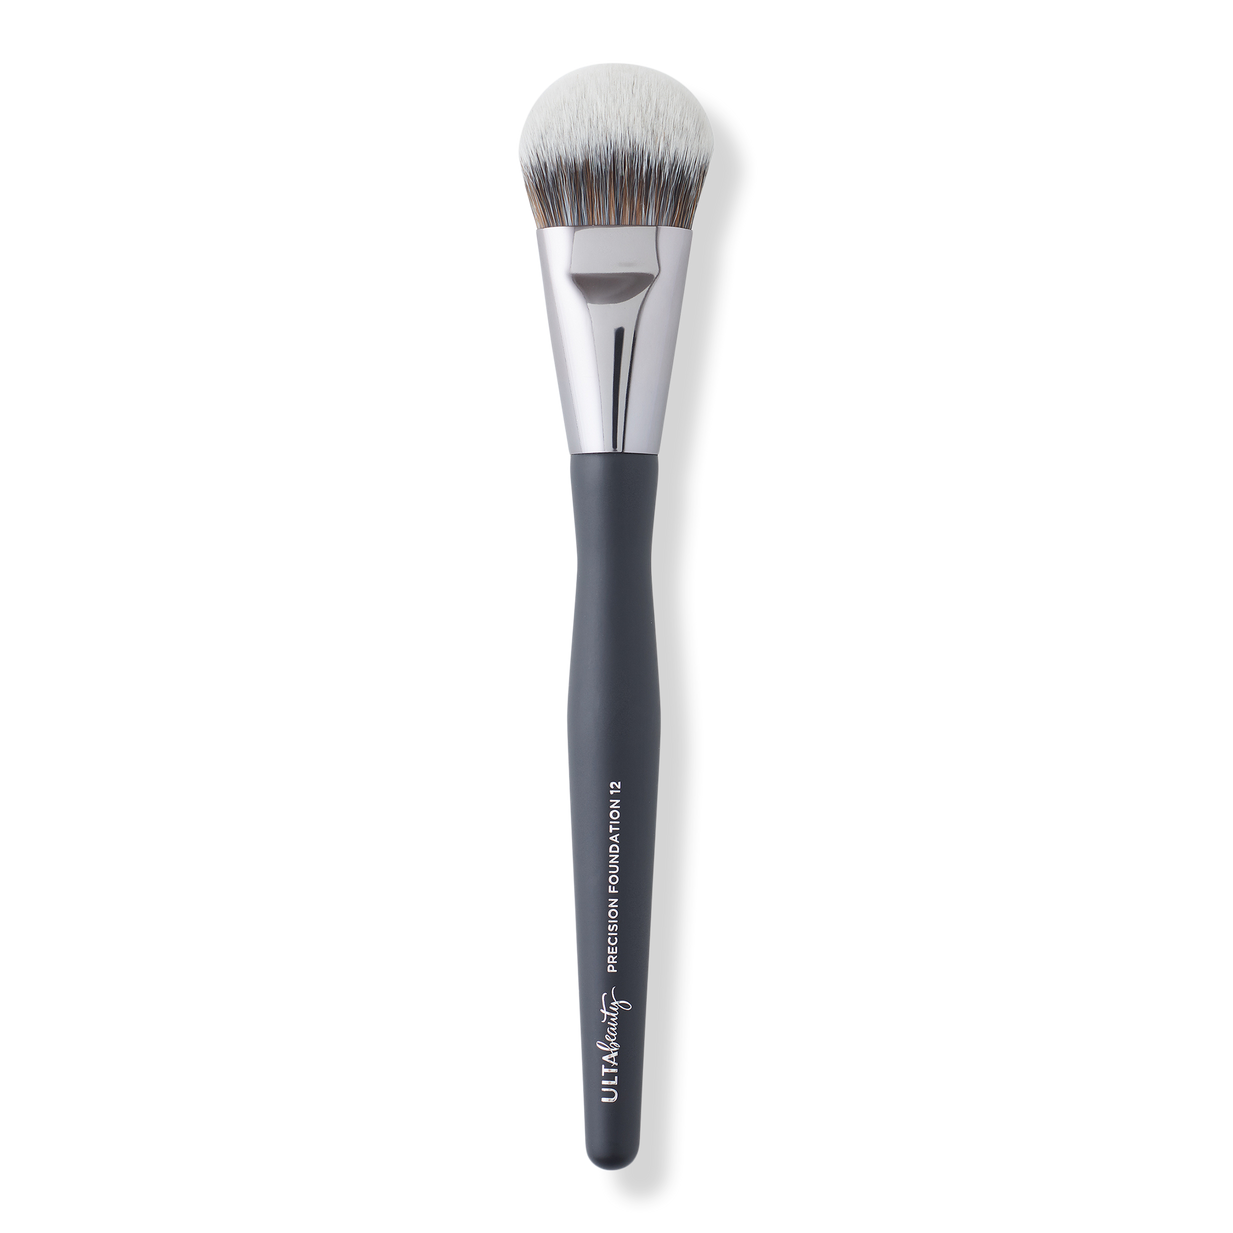 Contour Brush, Premium Blush Bronzer Face Makeup Brush Kit, Perfect For  Cheek Nose Blending Contouring 